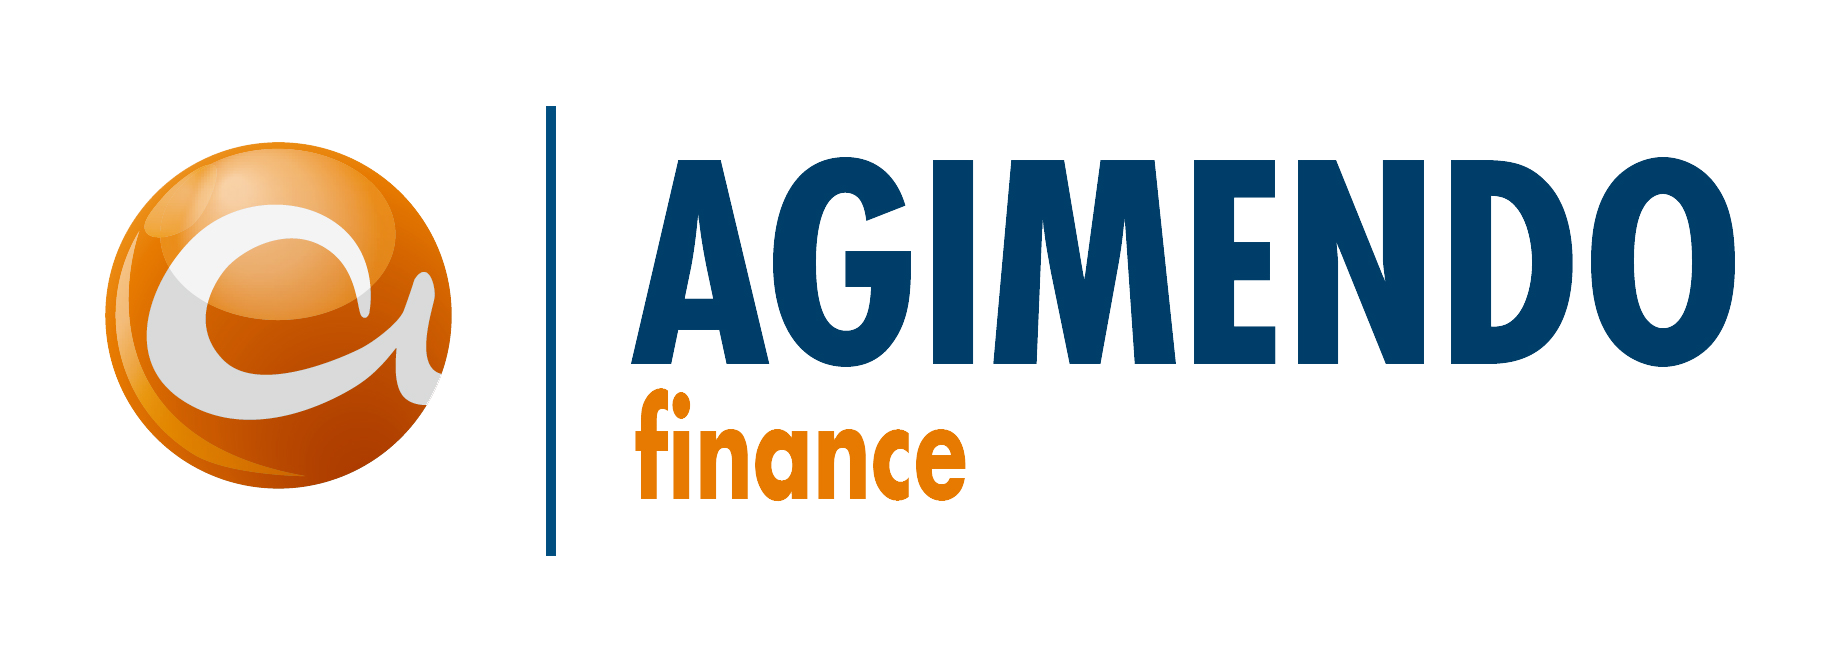 AGIMENDO.finance_small_frame-freigestellt